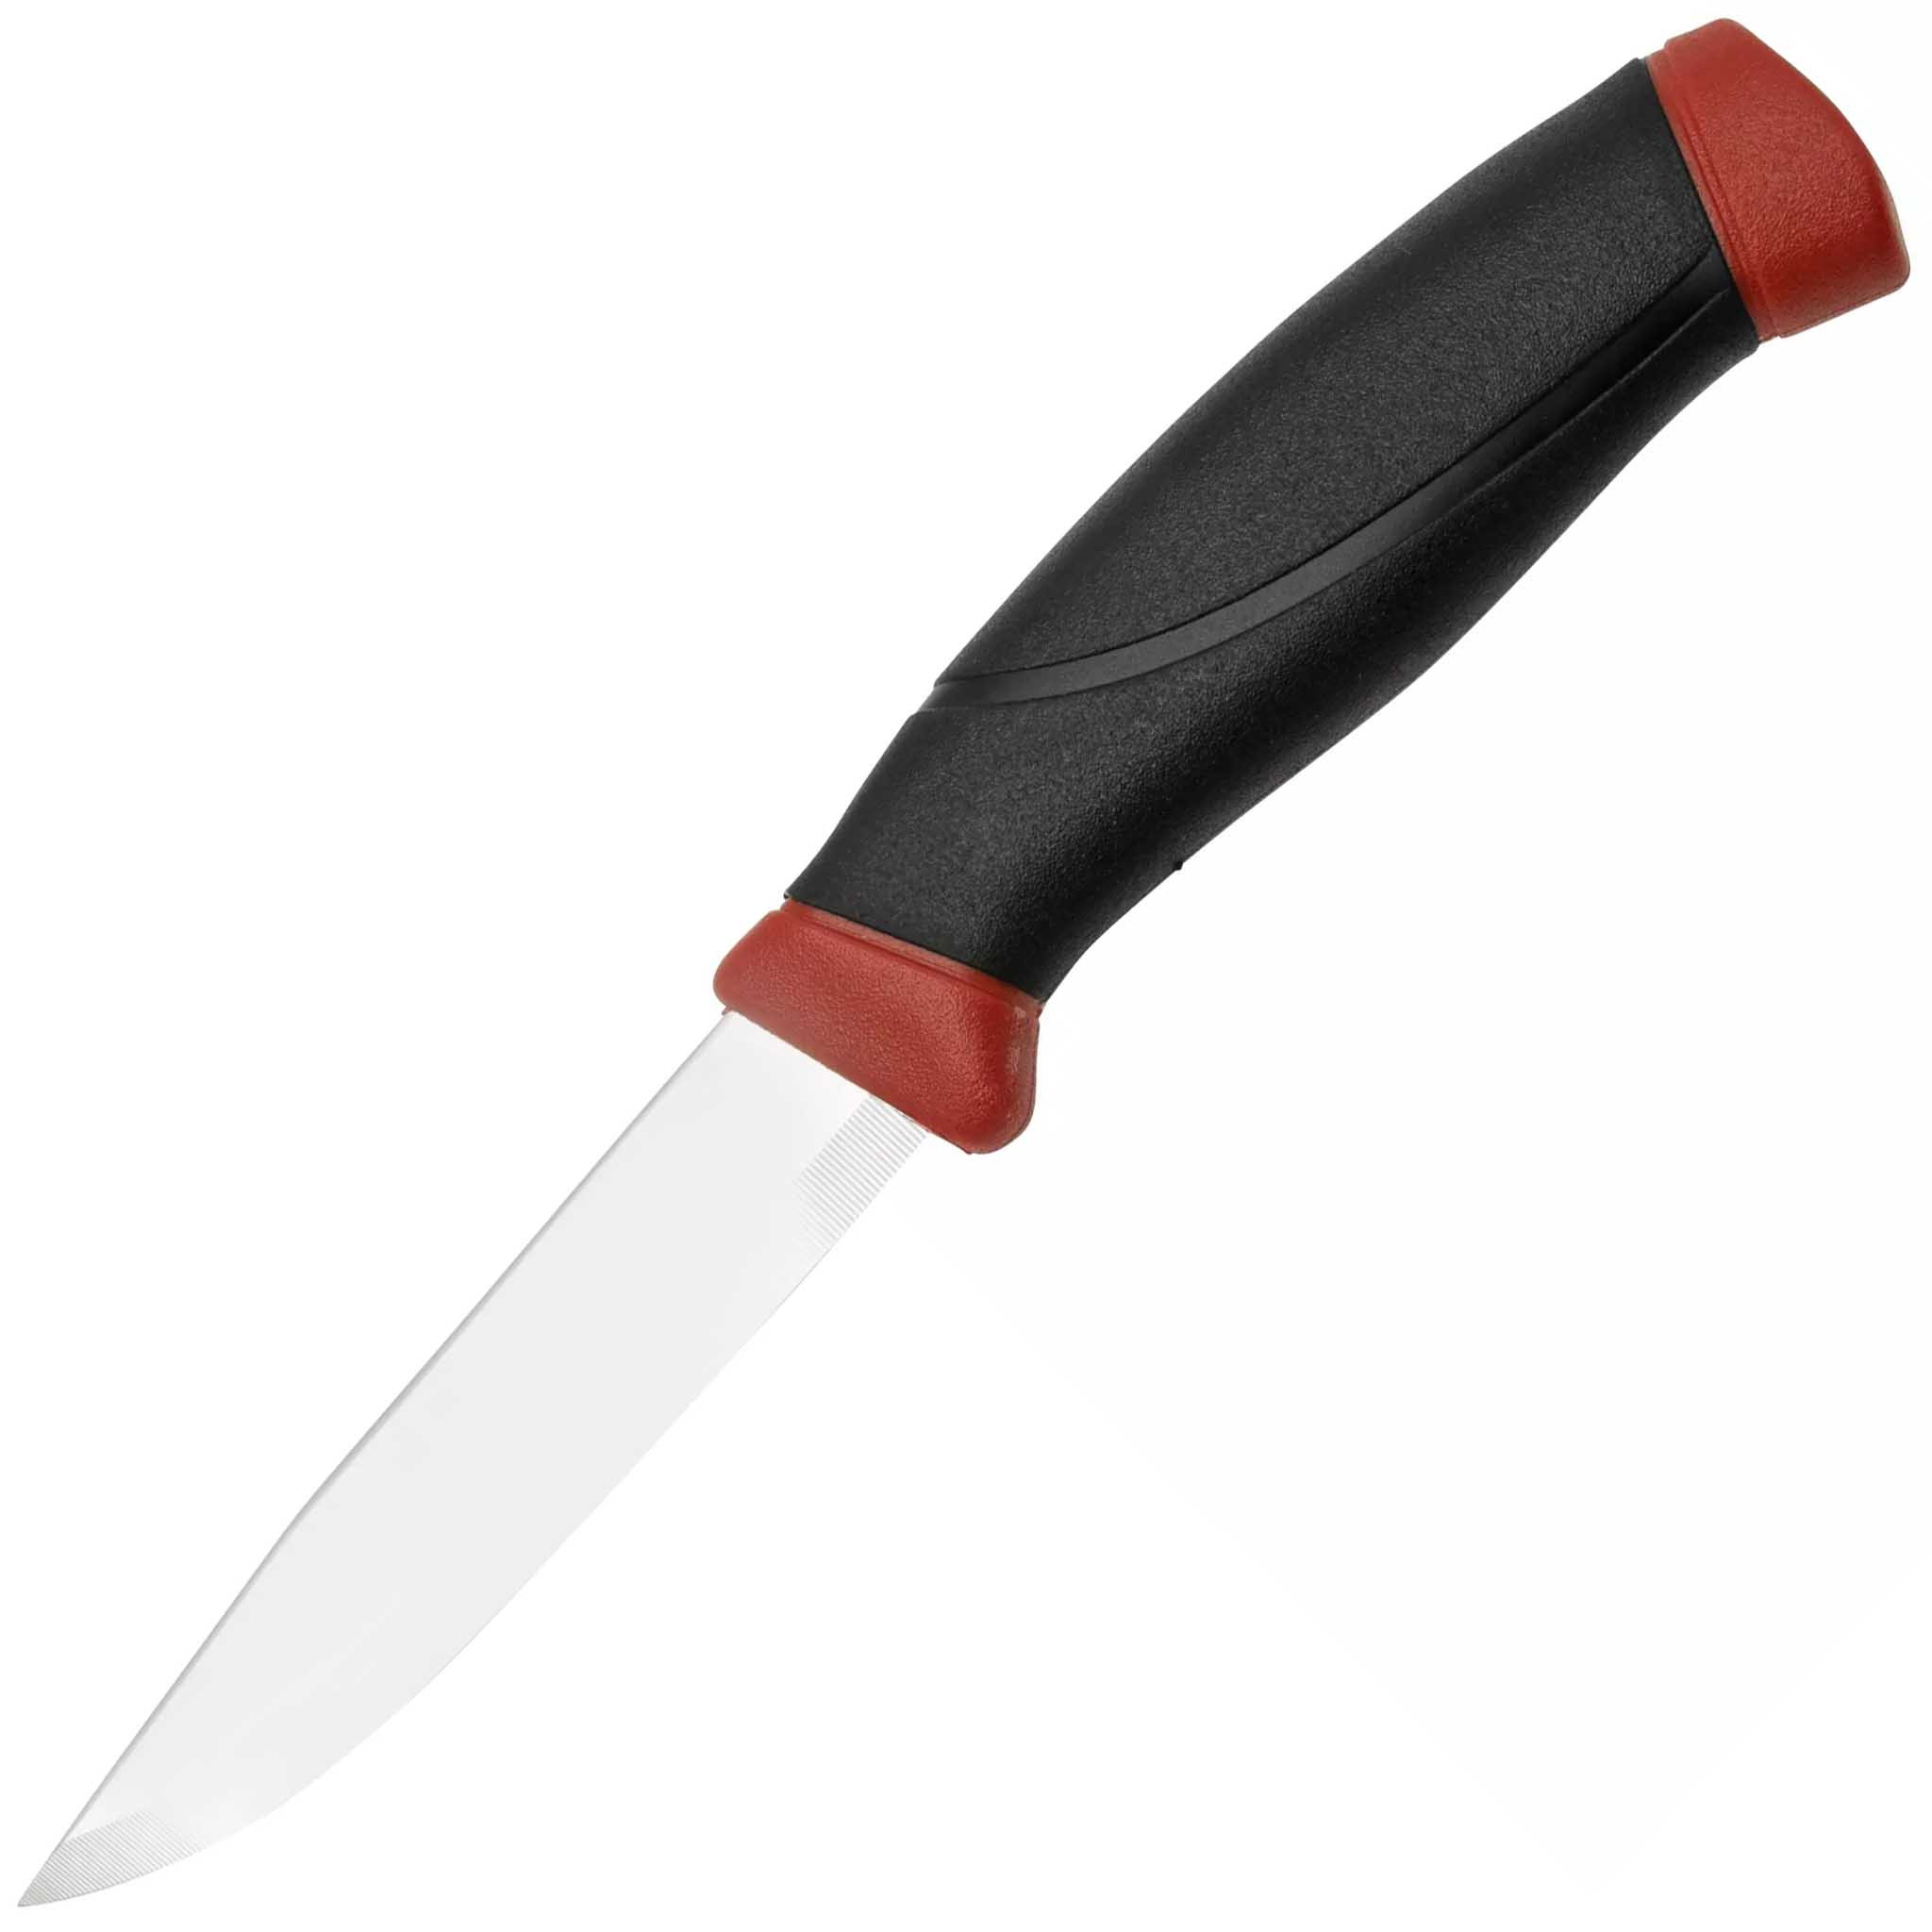 Нож с фиксированным лезвием Morakniv Companion, сталь Sandvik 12C27, рукоять резина, Dala red нож flex 12248 morakniv